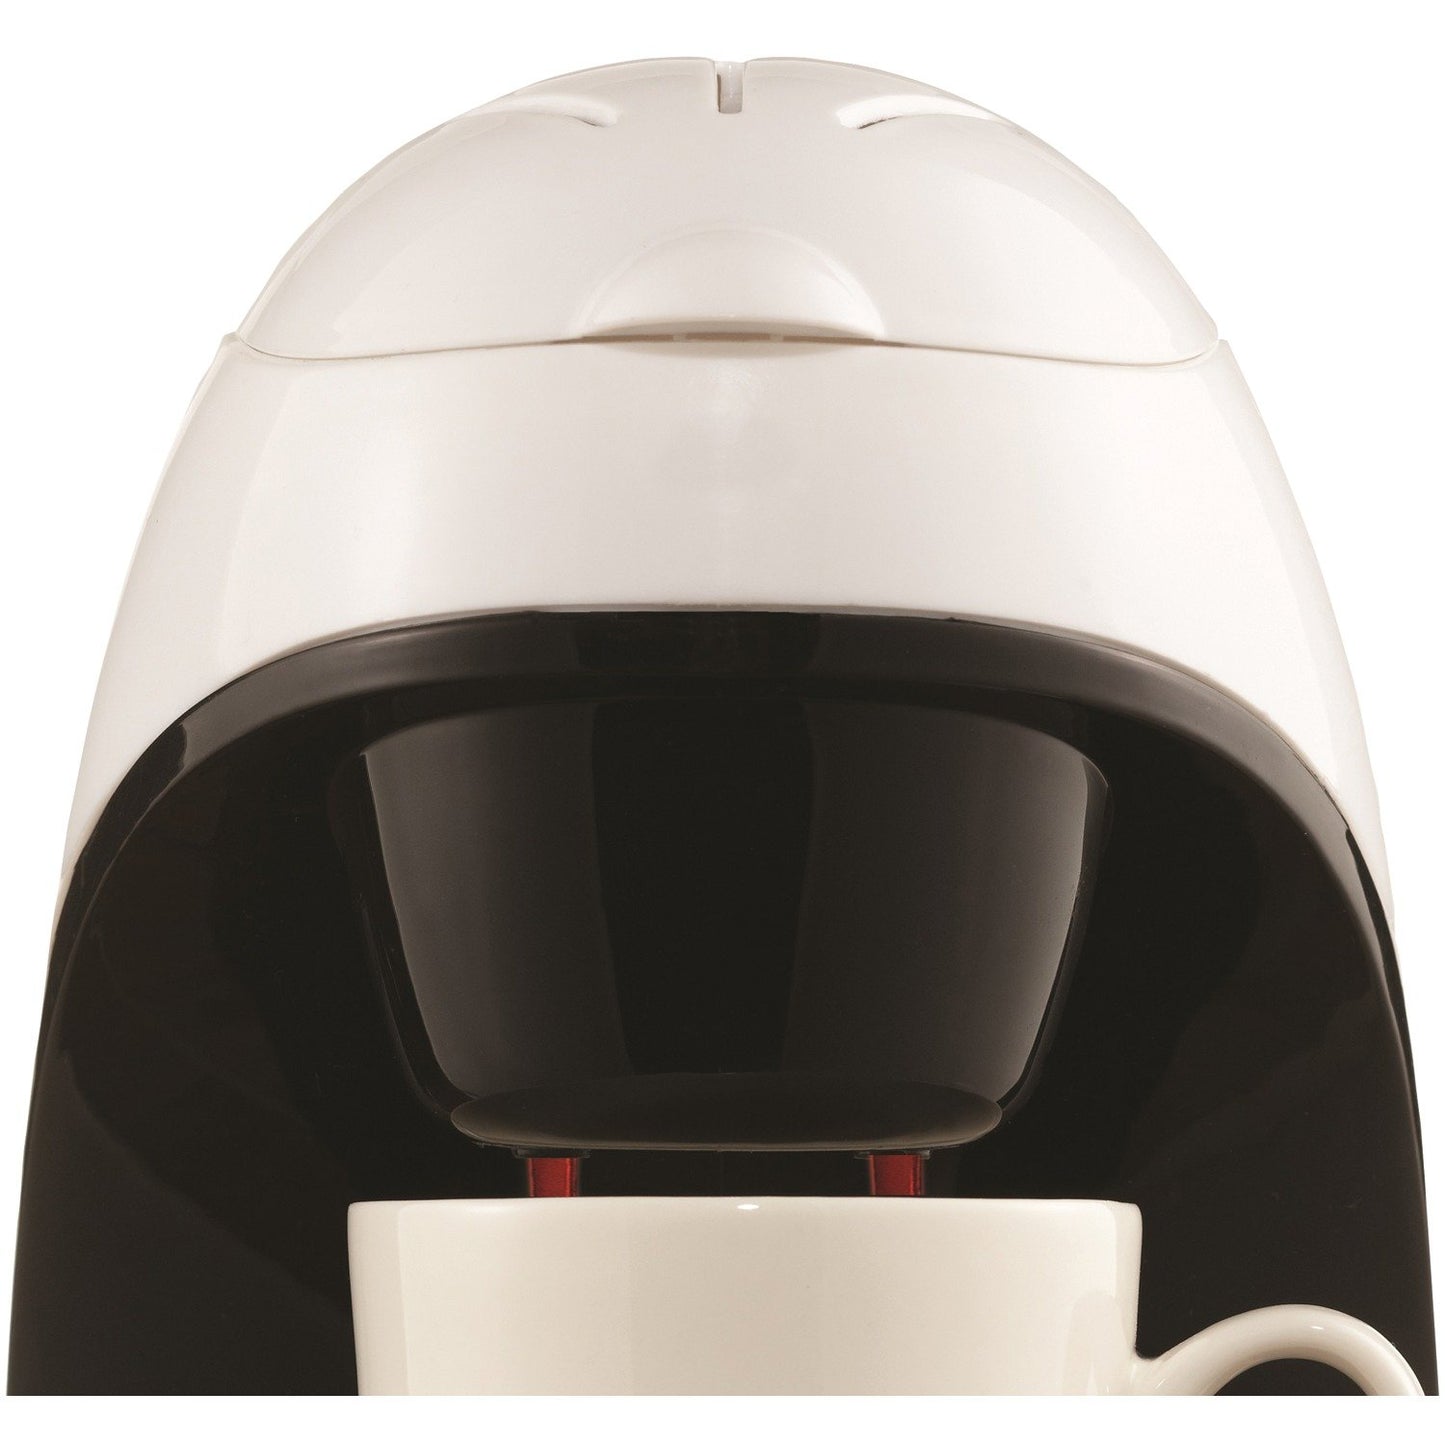 BRENTWOOD TS-112W Single-Serve Coffee Maker with Mug (White)